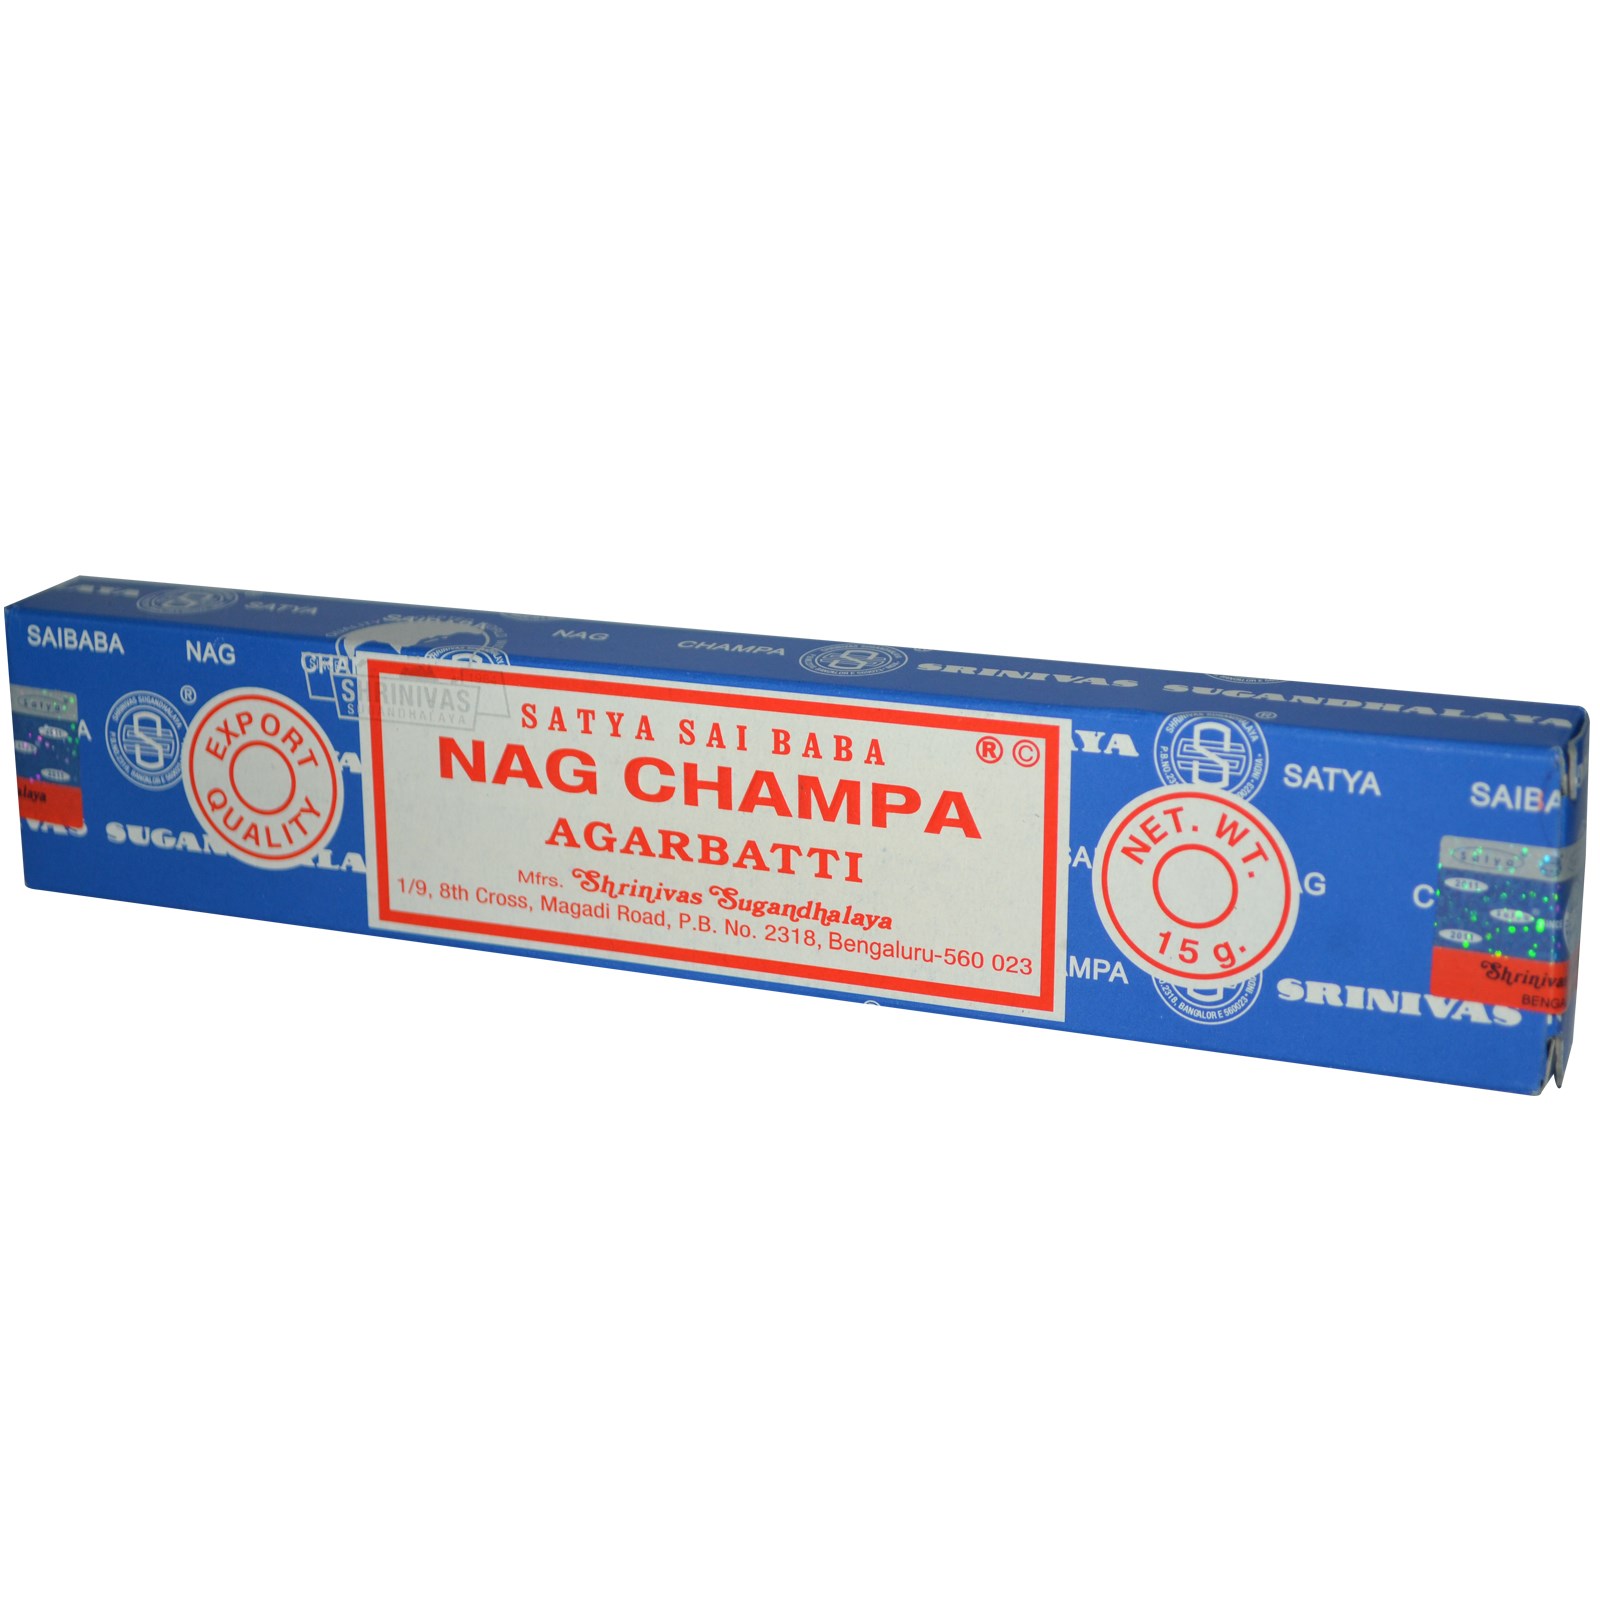 Satya Sai Baba Nag Champa Agarbatti Original Incense Sticks 180g FREE HOLDER 